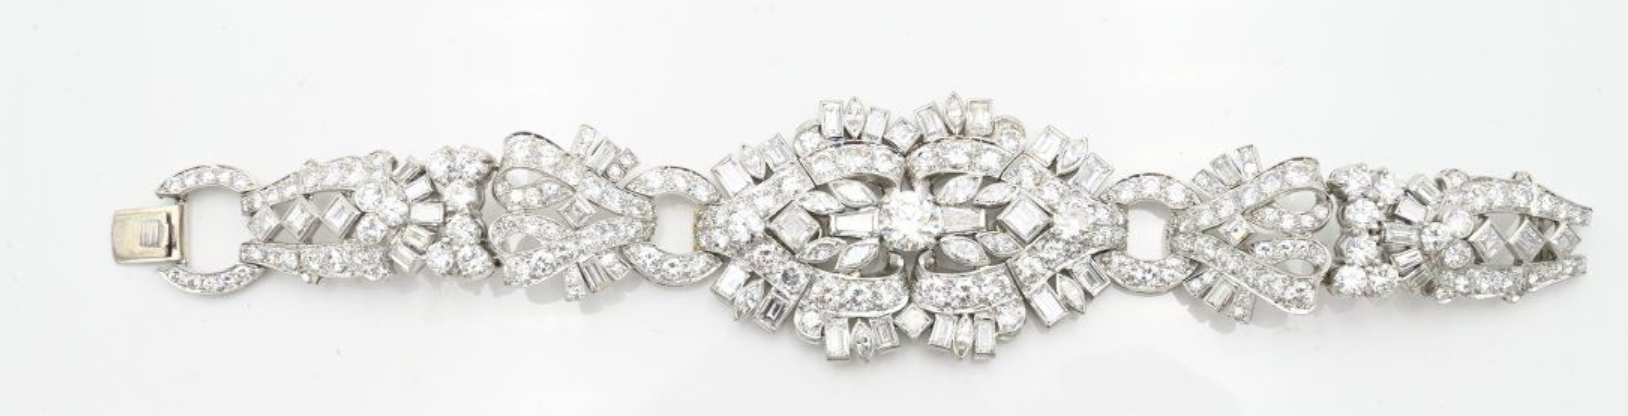 Convertible Art Deco-style platinum and diamond bracelet, $15,000-$25,000